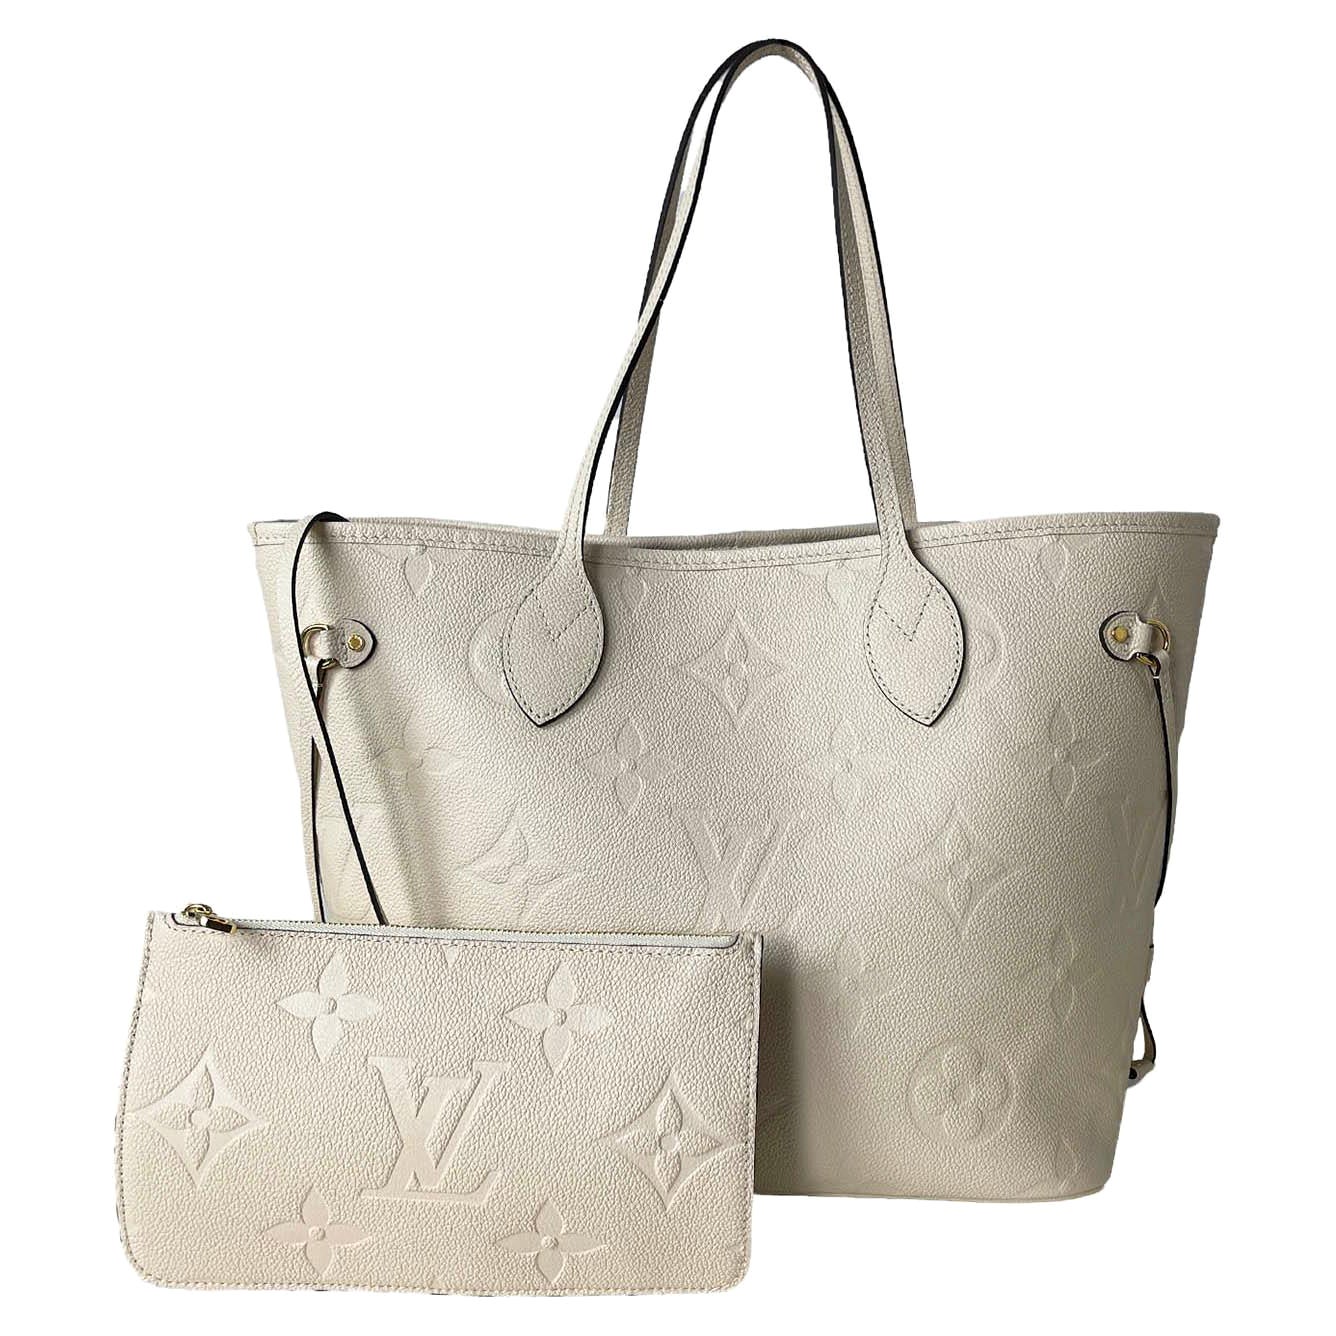 Louis Vuitton - Neverfull mm Tote Bag - Cream - Monogram Leather - Women - Luxury